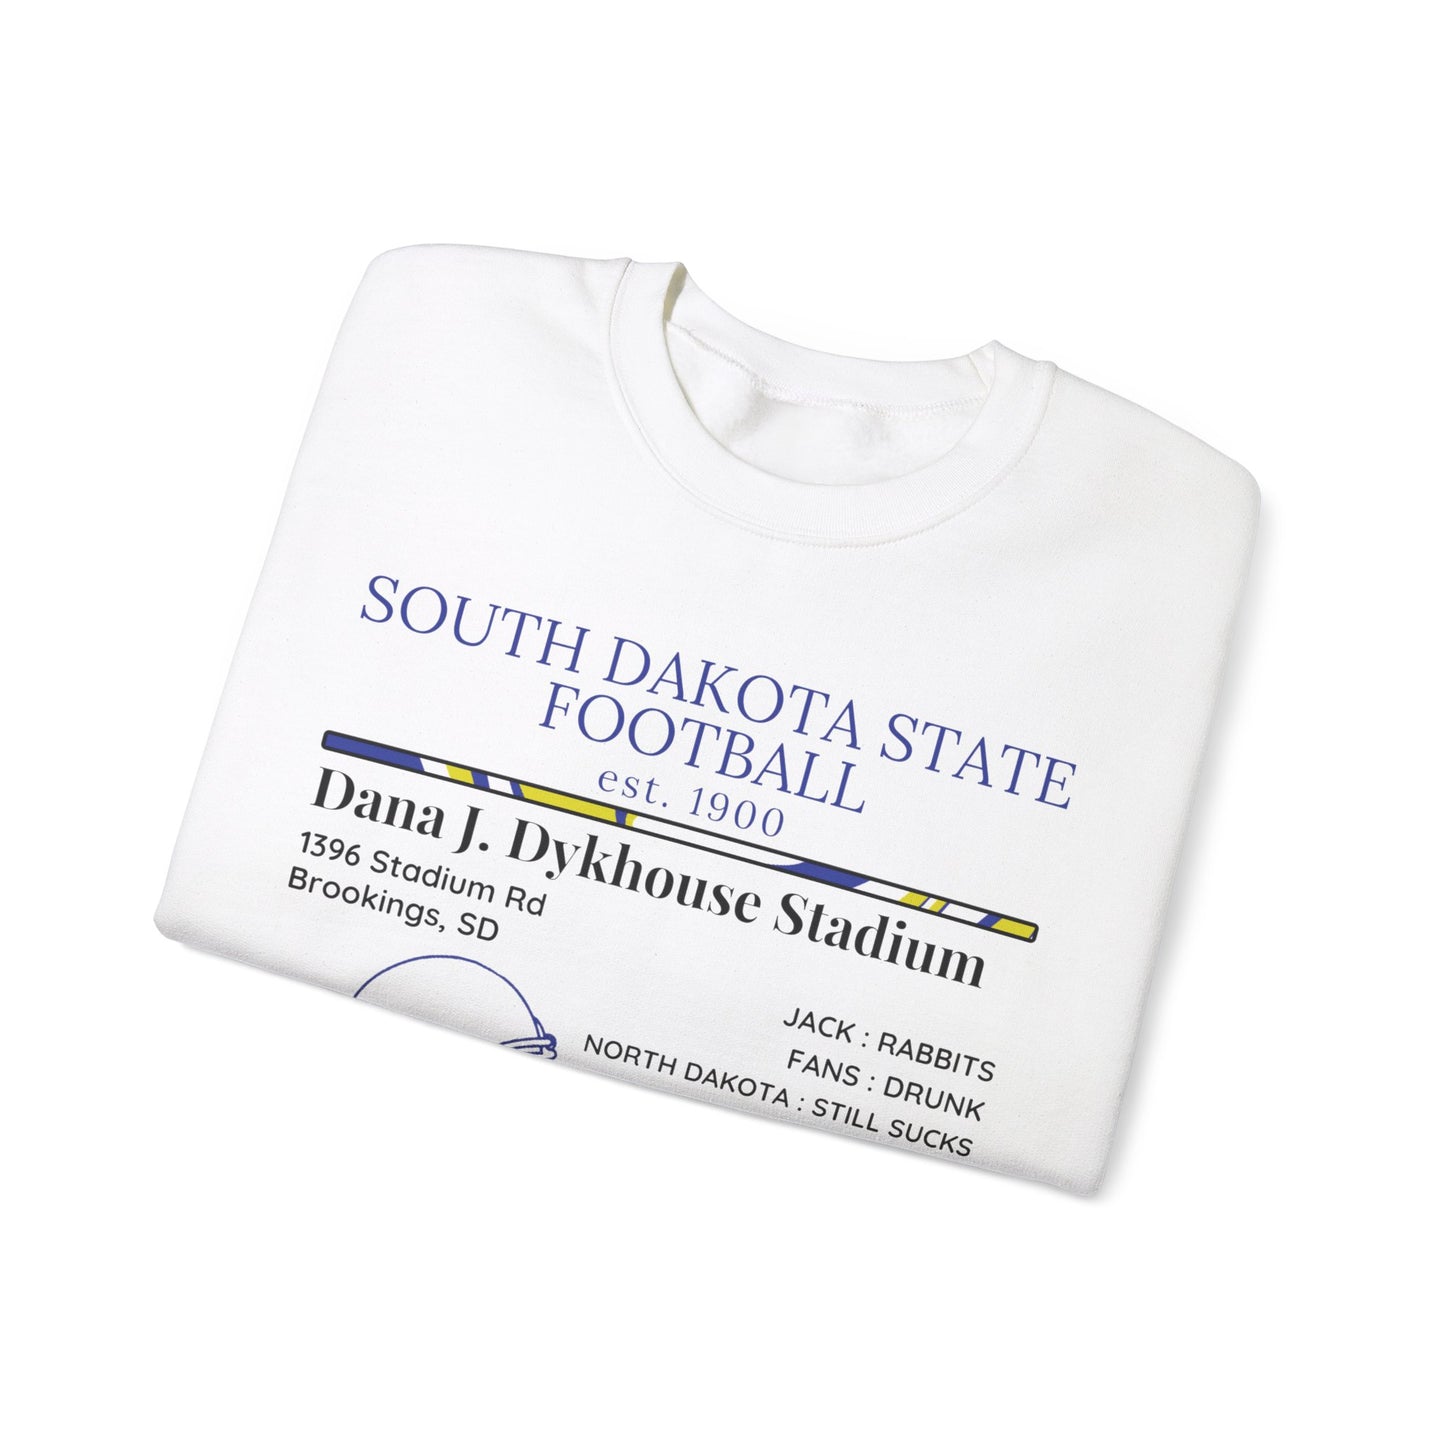 South Dakota State Football Sweatshirt